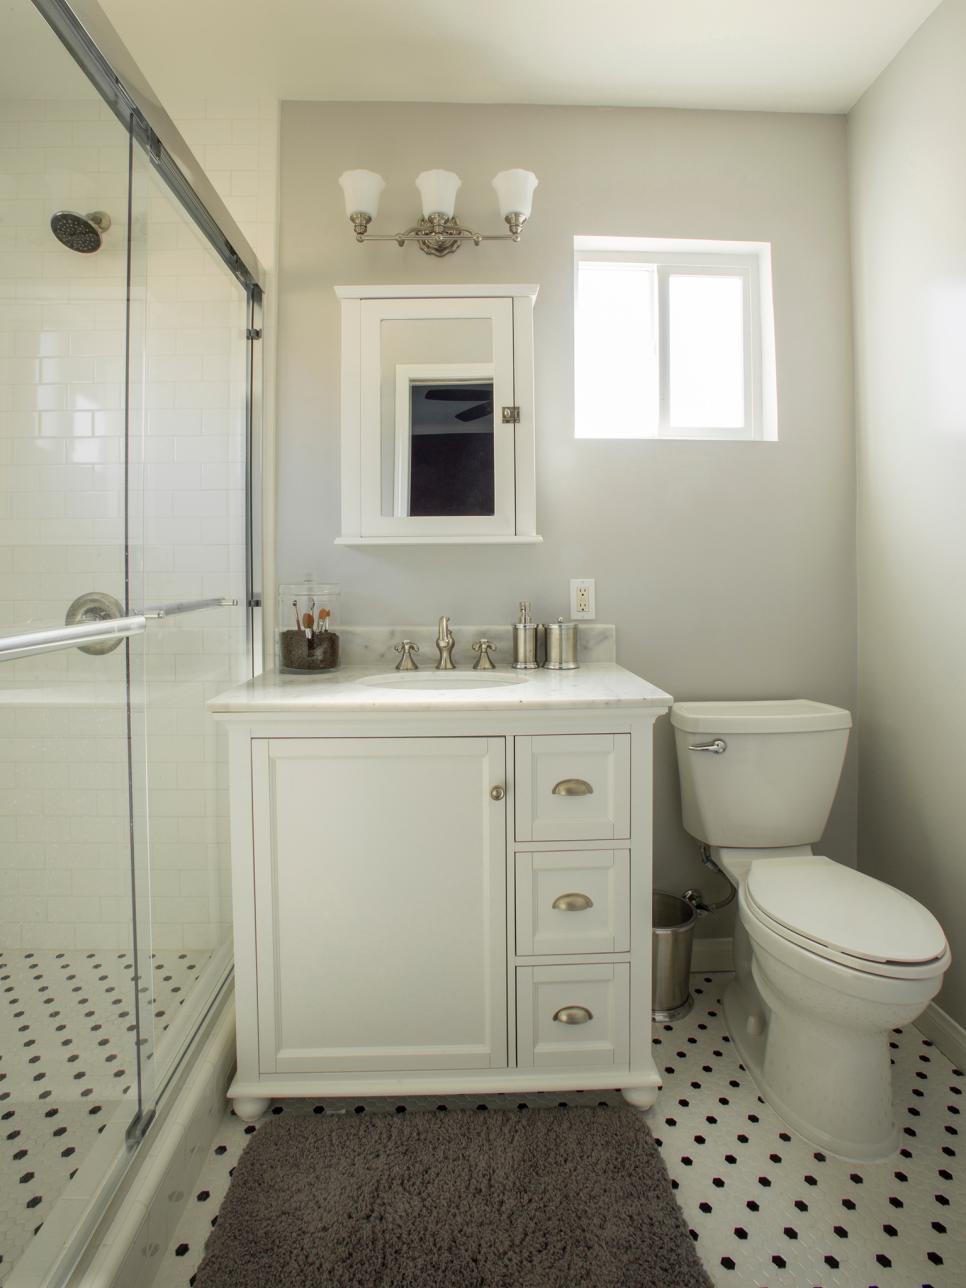 bathroom gray flooring hgtv floor bathrooms grey vanity tile renovation hunters tiles shower modern walls decorating bath remodeling remodels remodel